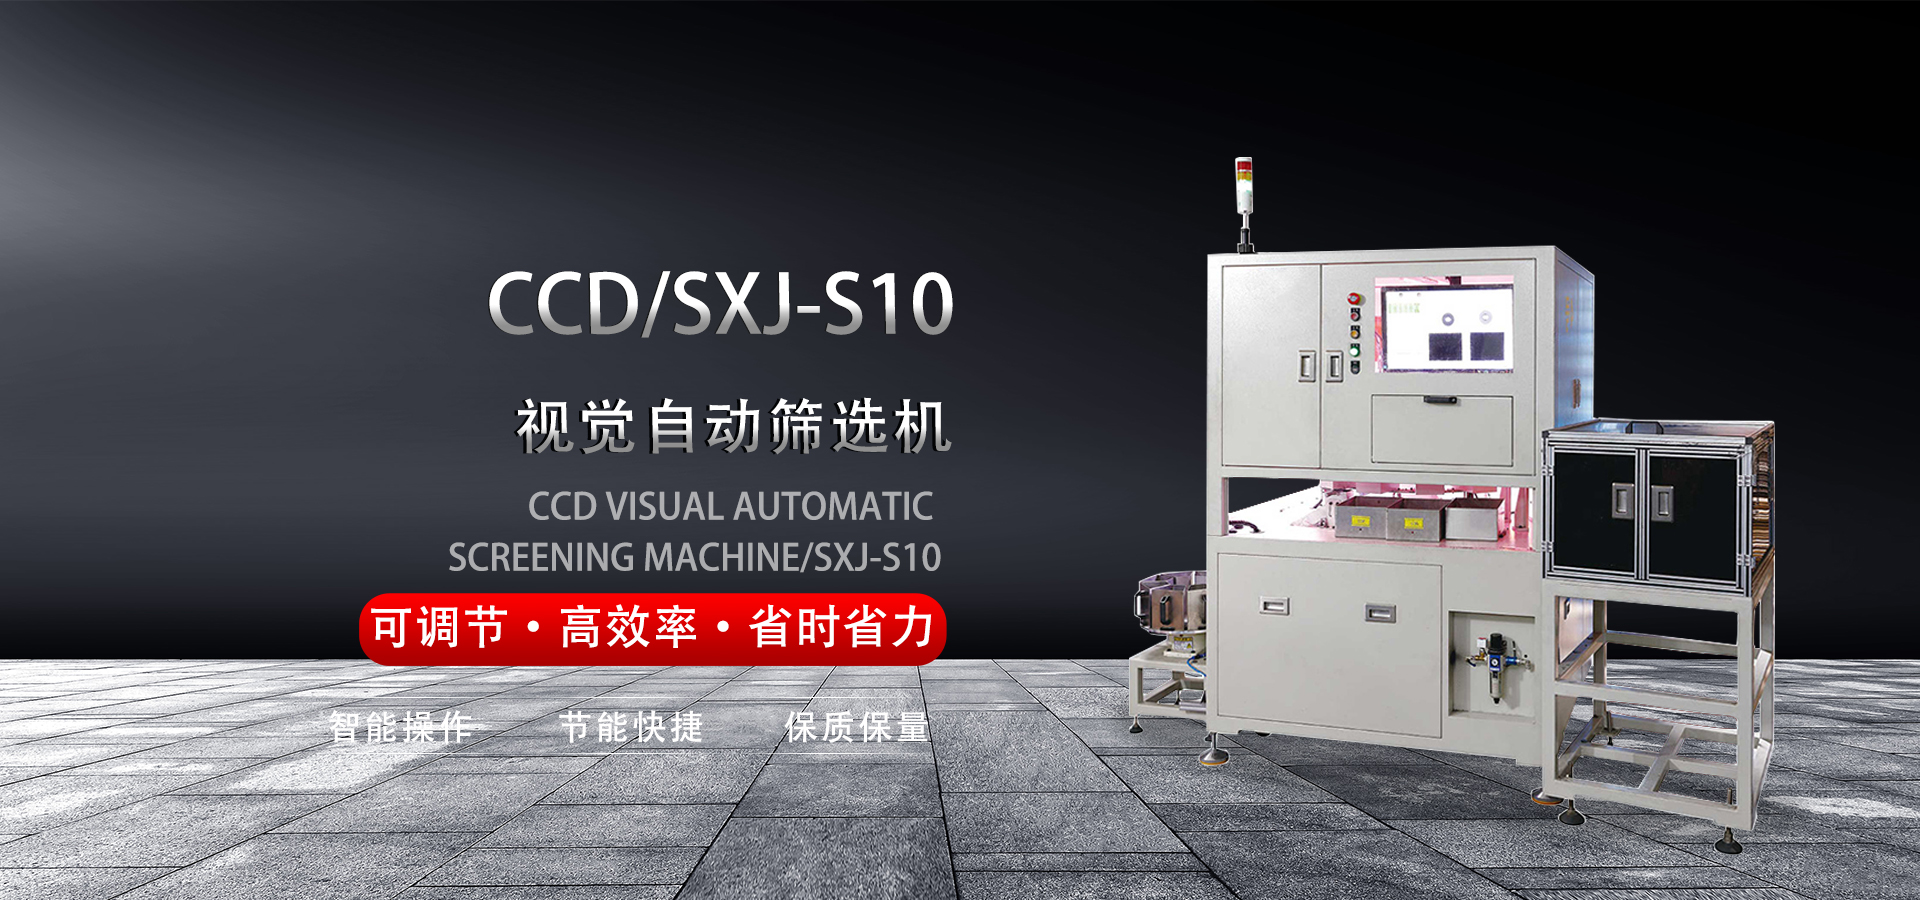 CCD視覺自動篩選機/SXJ-S10